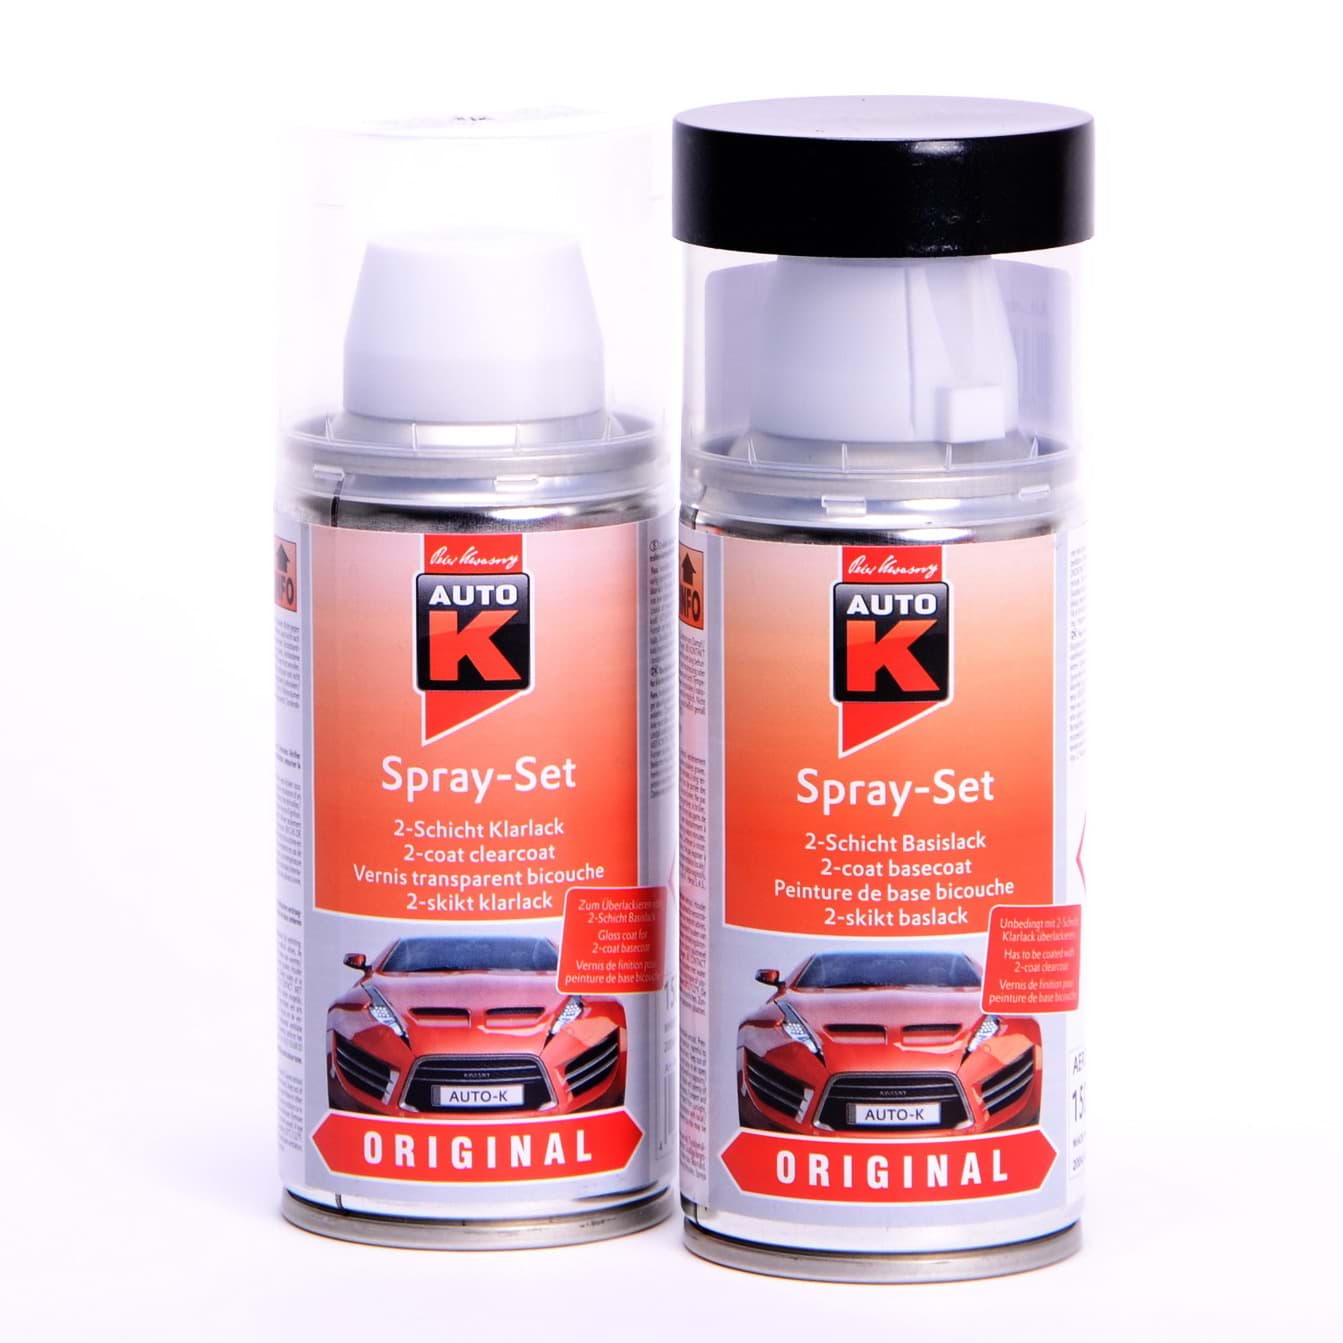 Auto-K Spray-Set Autolack für Opel 157 Starsibler III met 21470 resmi